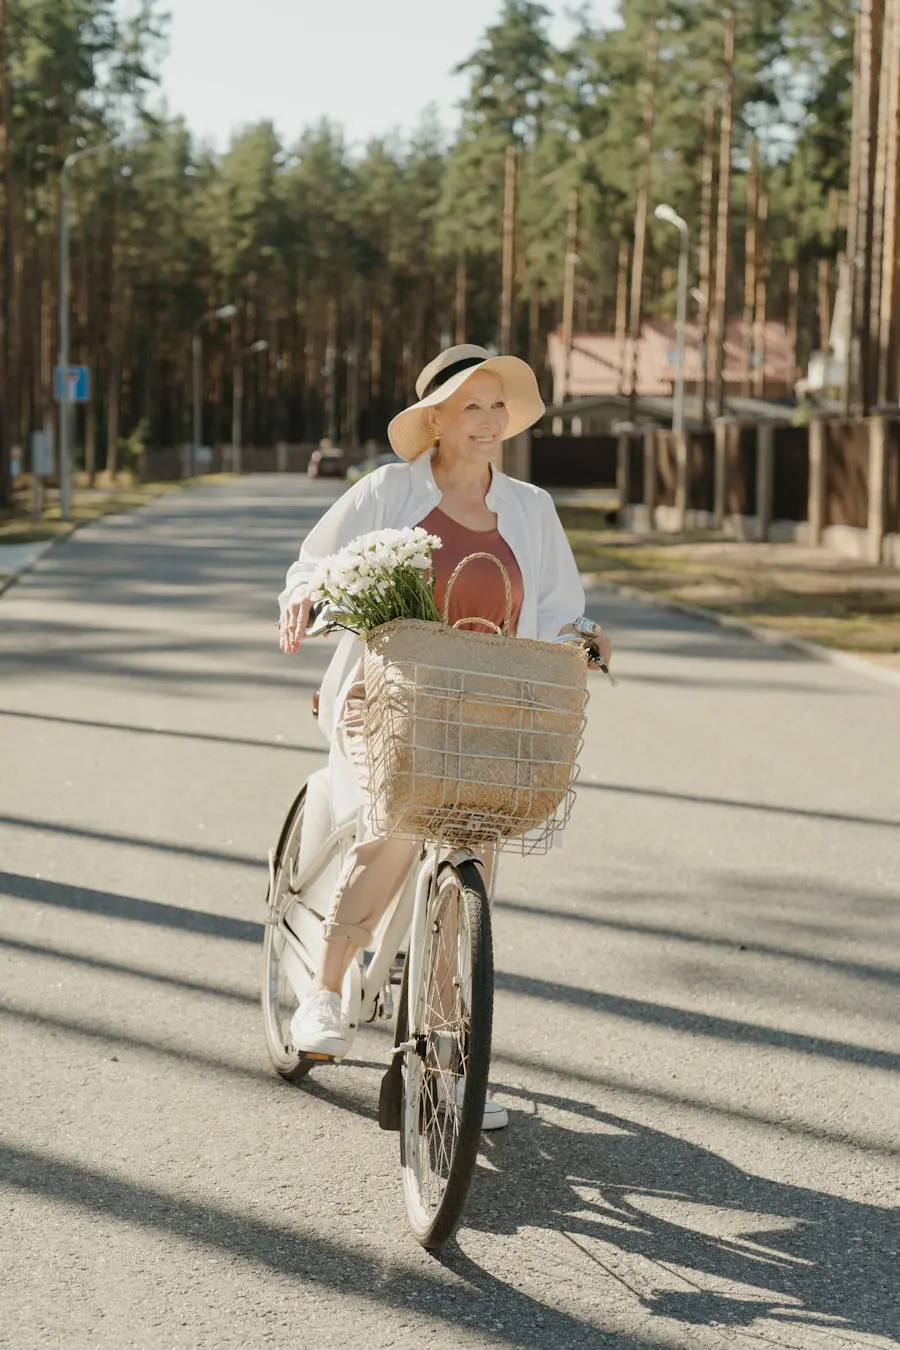 Older lady on a bike with a basket